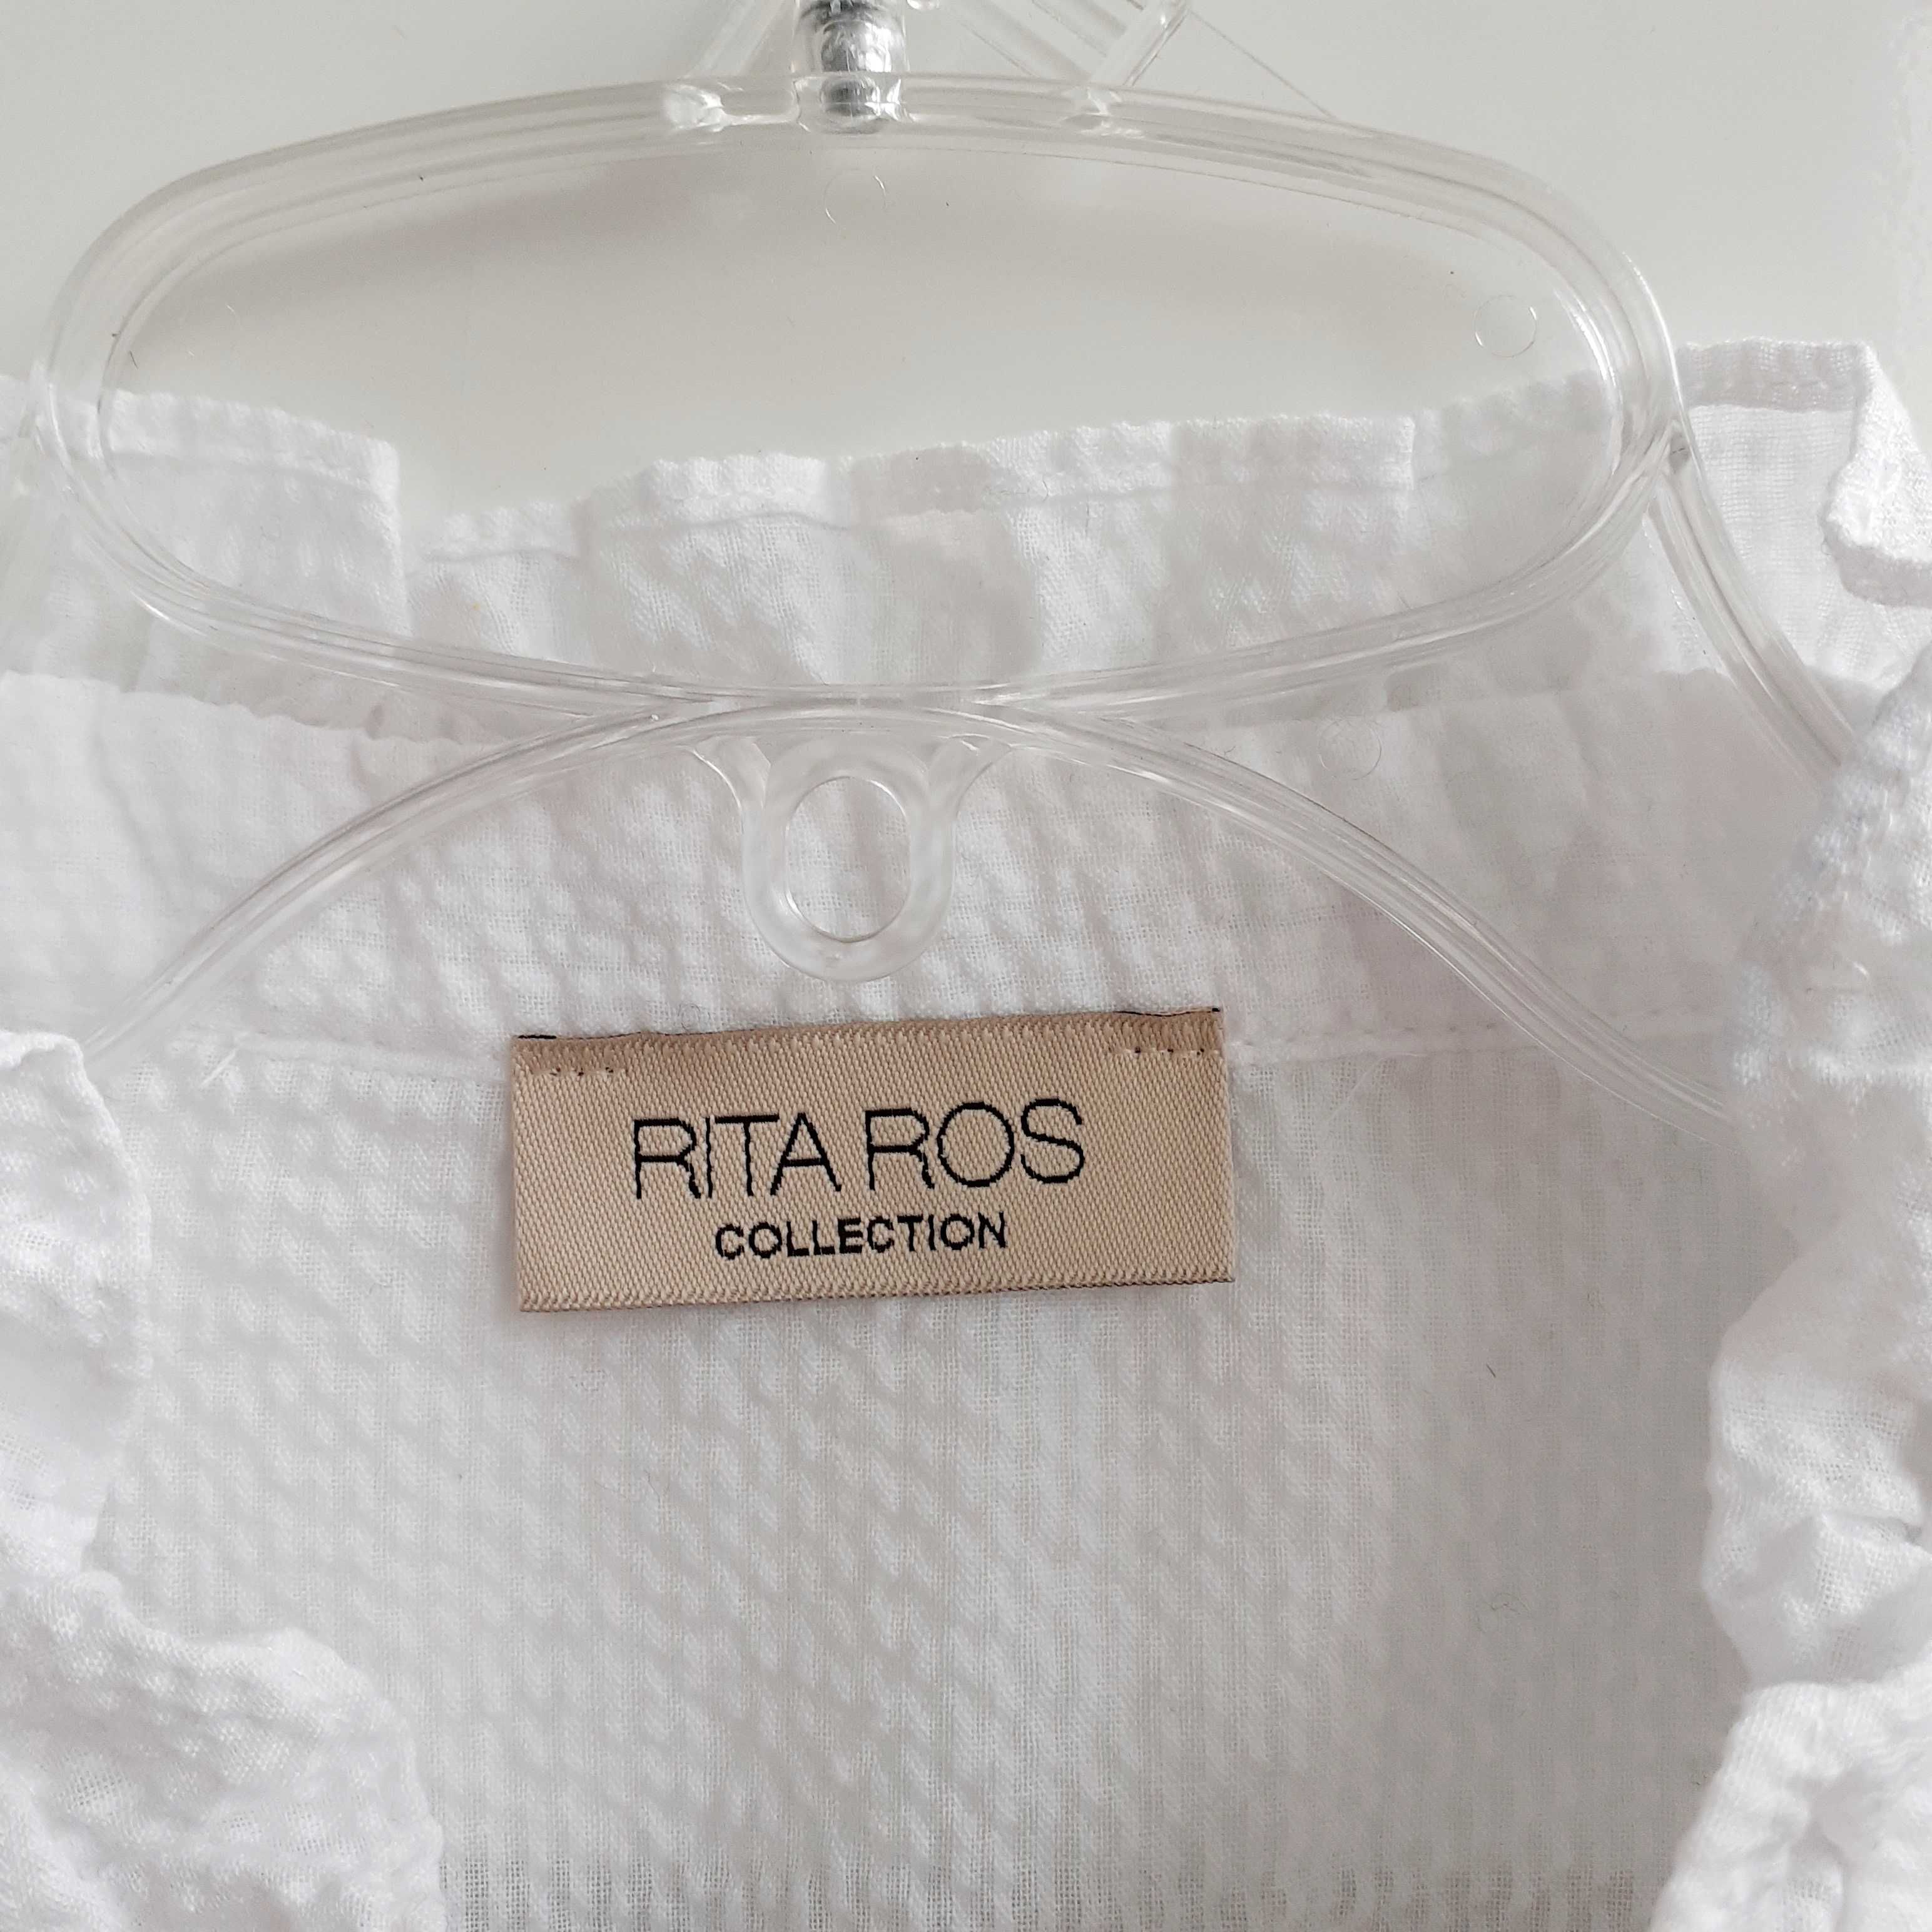 Biała elegancka koszula Ritaros S